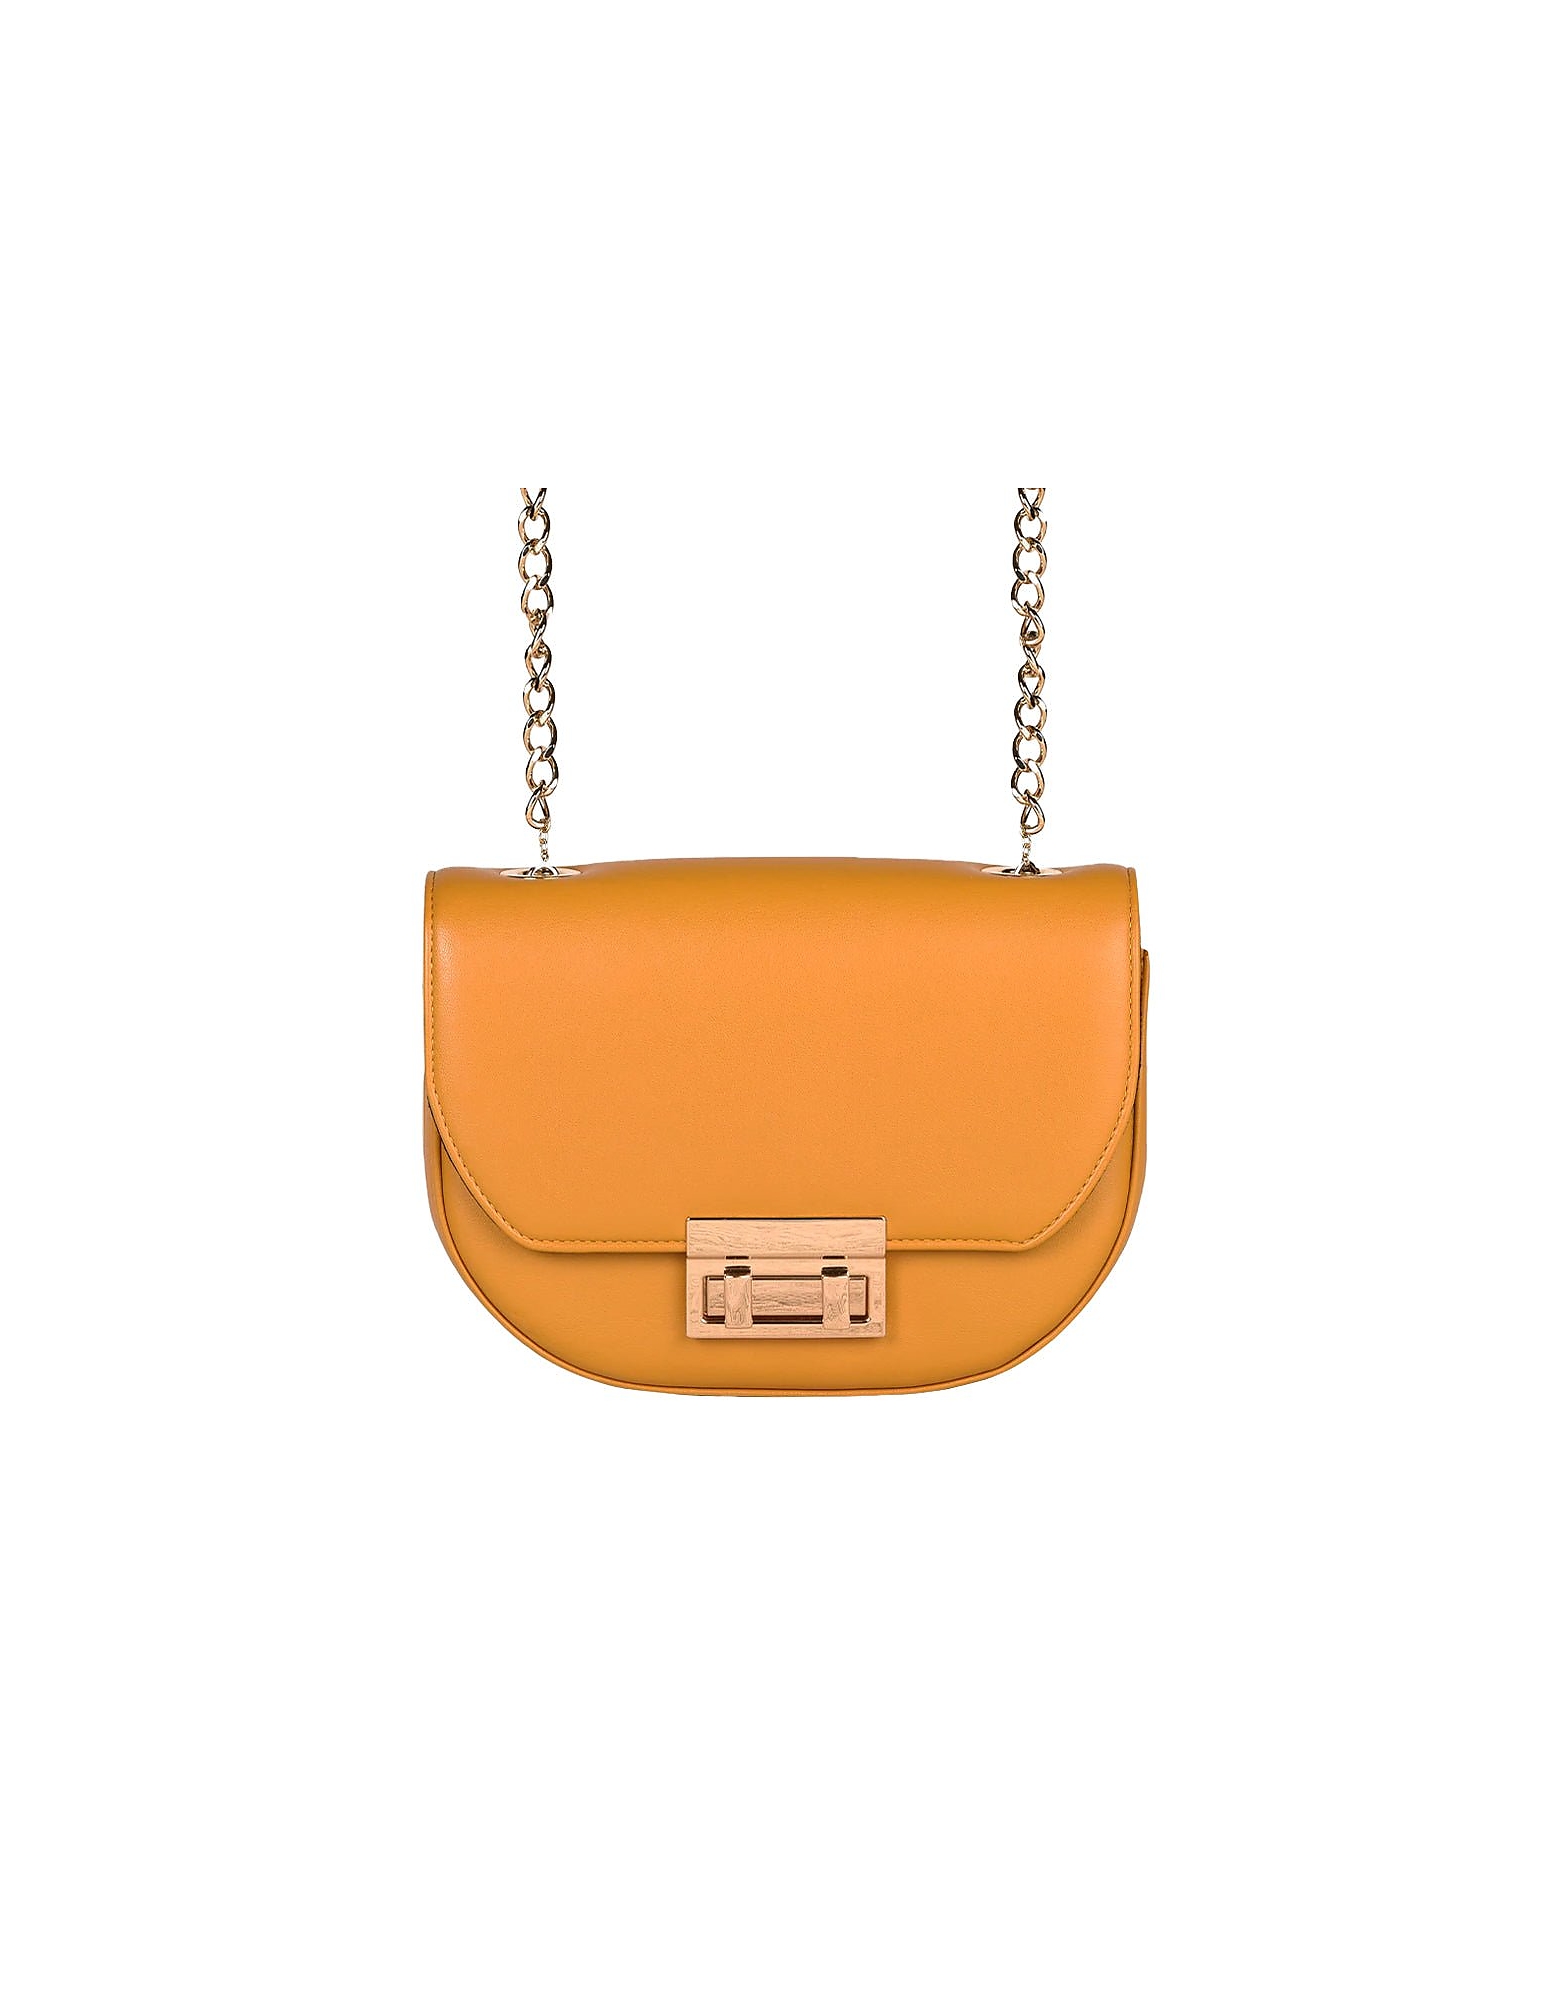 Anema Designer Handbags Regina Capri - Corn Leather And Rpet Crossbody Bag In Jaune